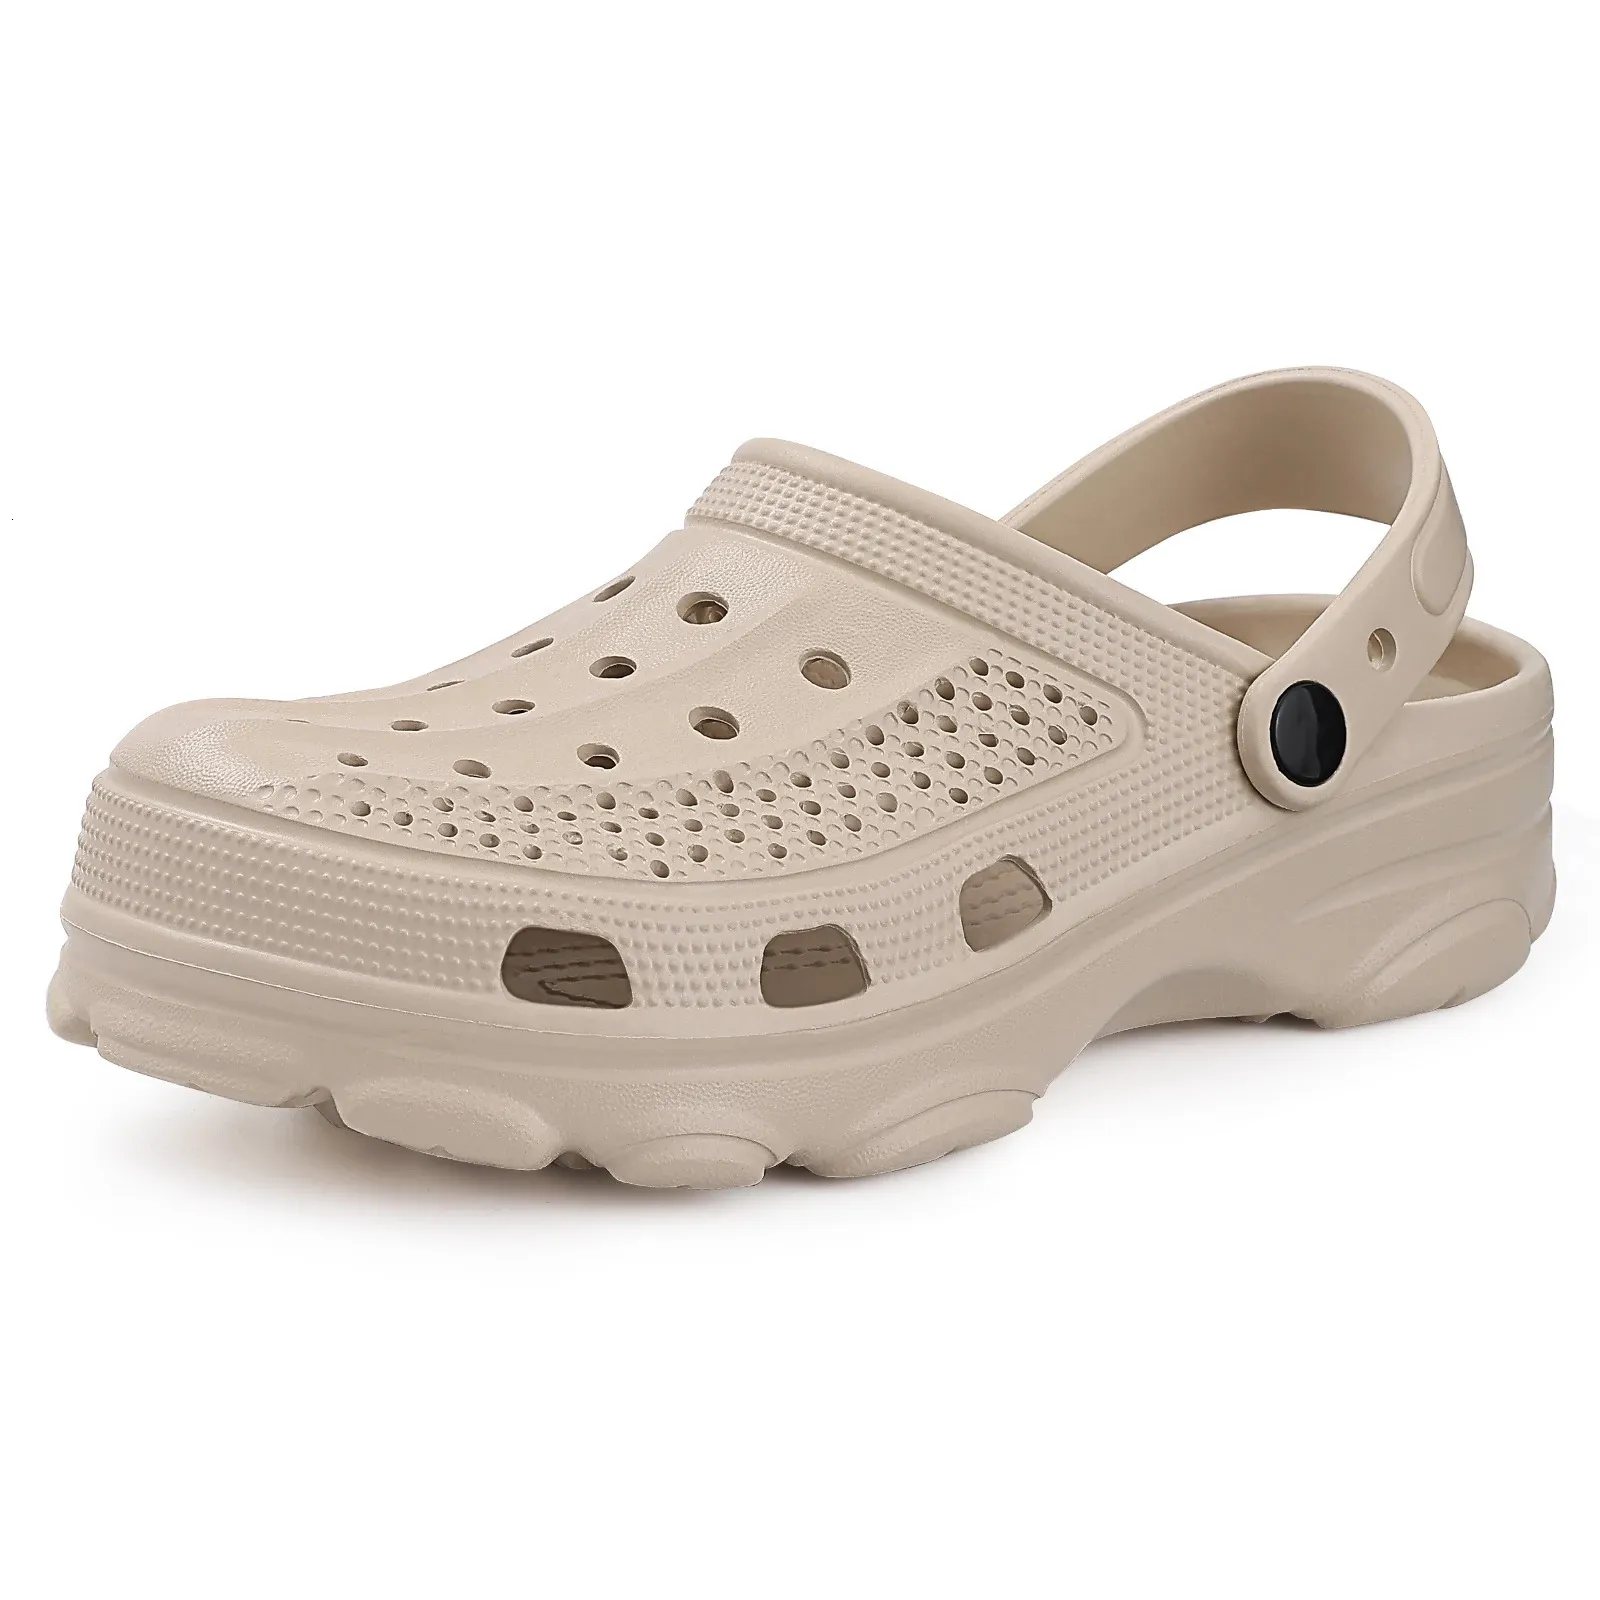 Kidmi Fashion Men Holes Slippers Mens Garden Clogs Slippers buiten strand slippers voor mannen zomer unisex huis holes schoenen 240509